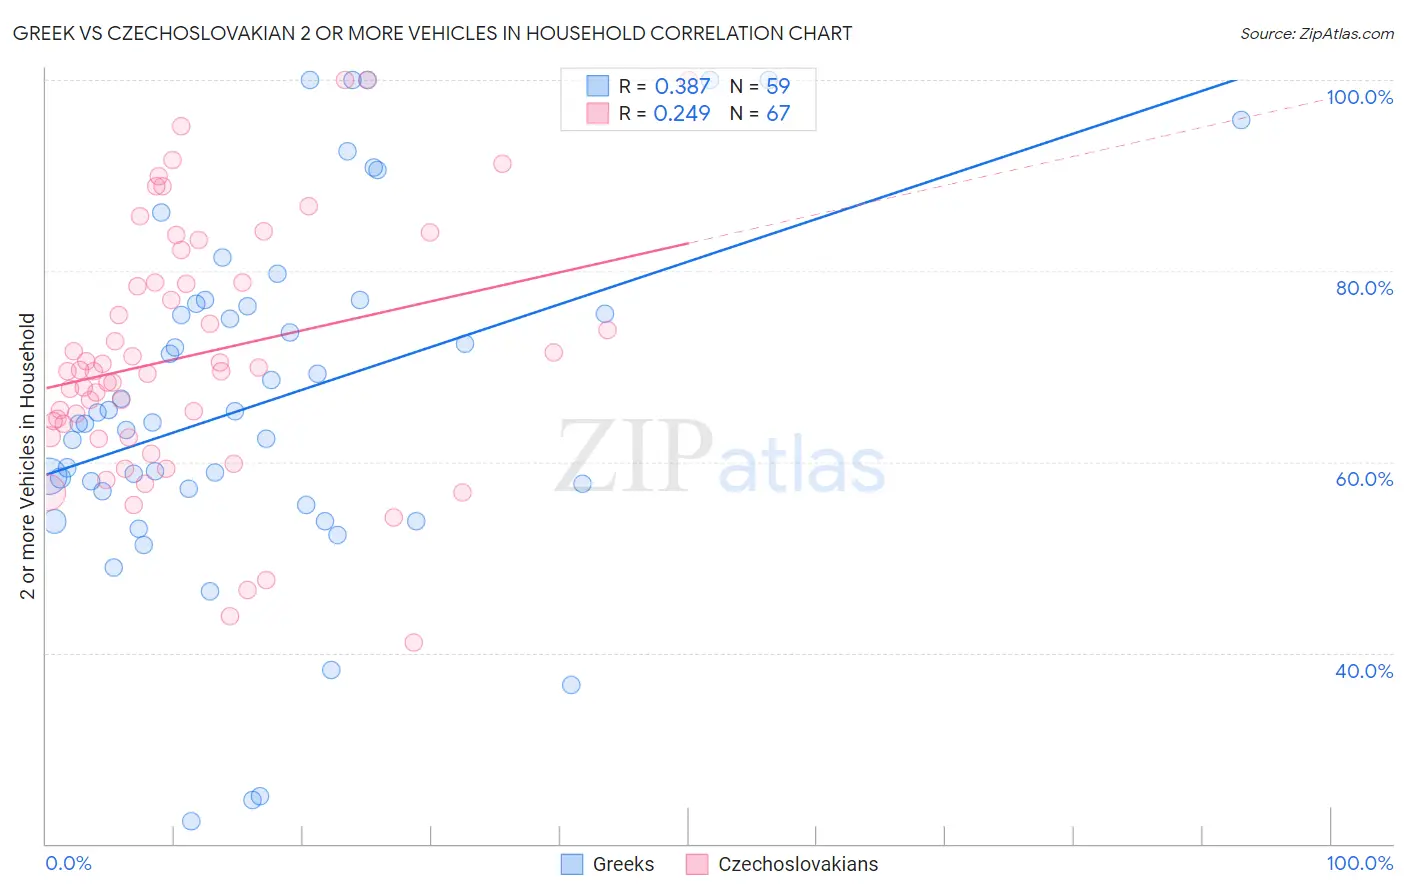 Greek vs Czechoslovakian 2 or more Vehicles in Household